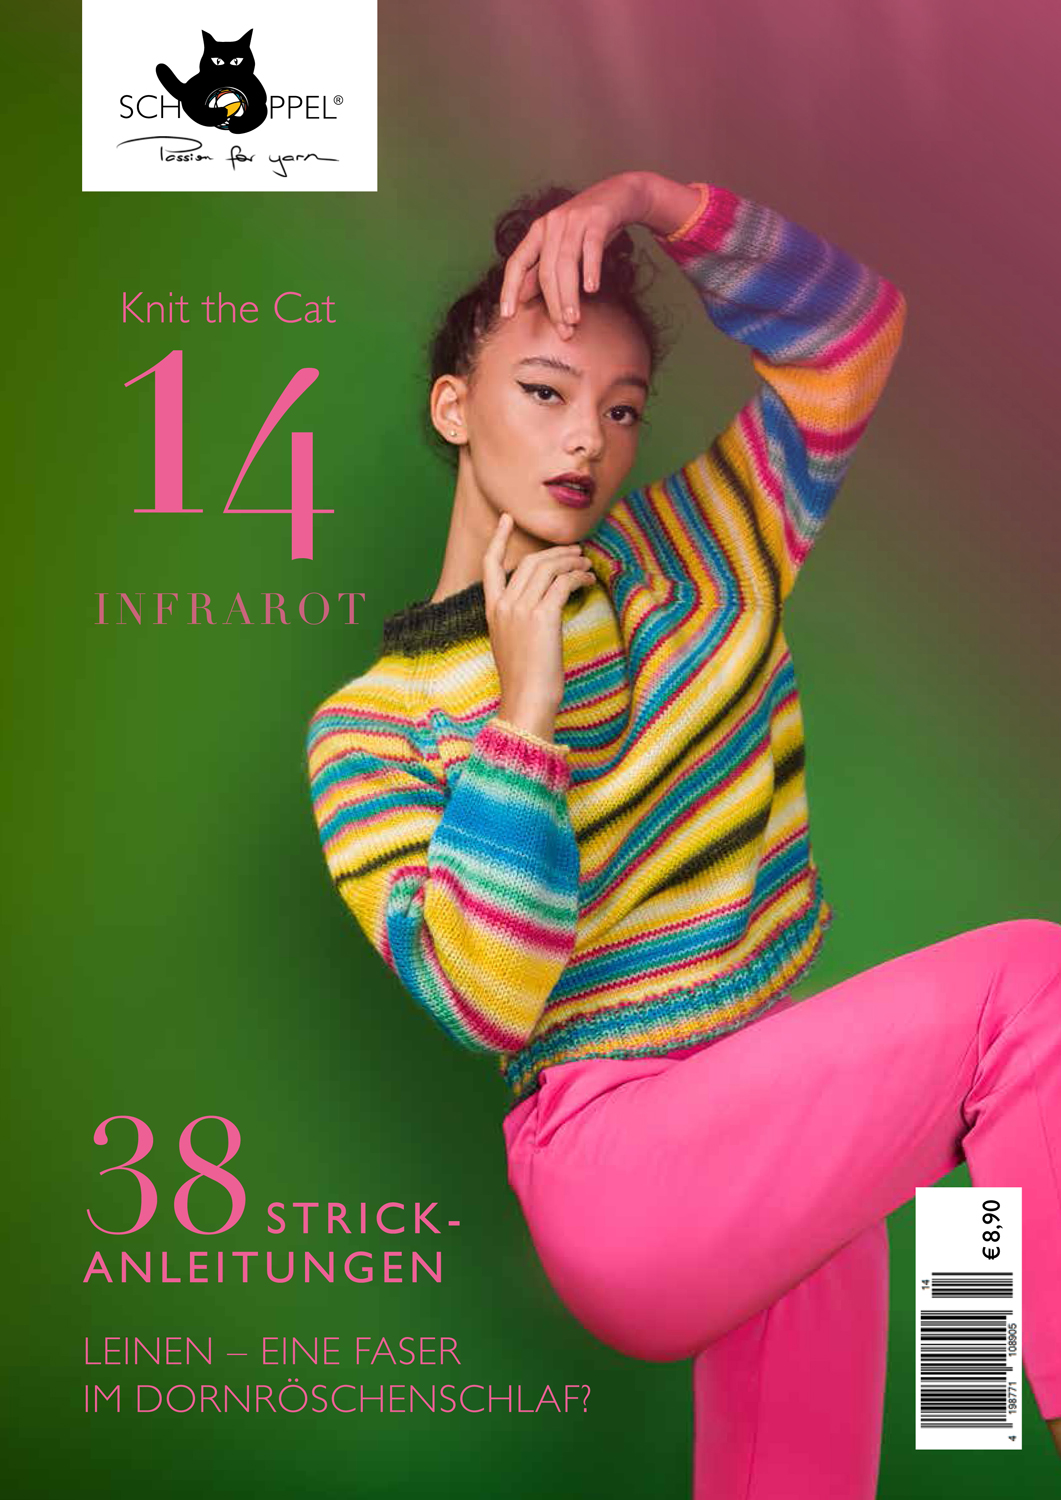 Knit the Cat 14 von Schoppel - Infrarot Kreativ Heft